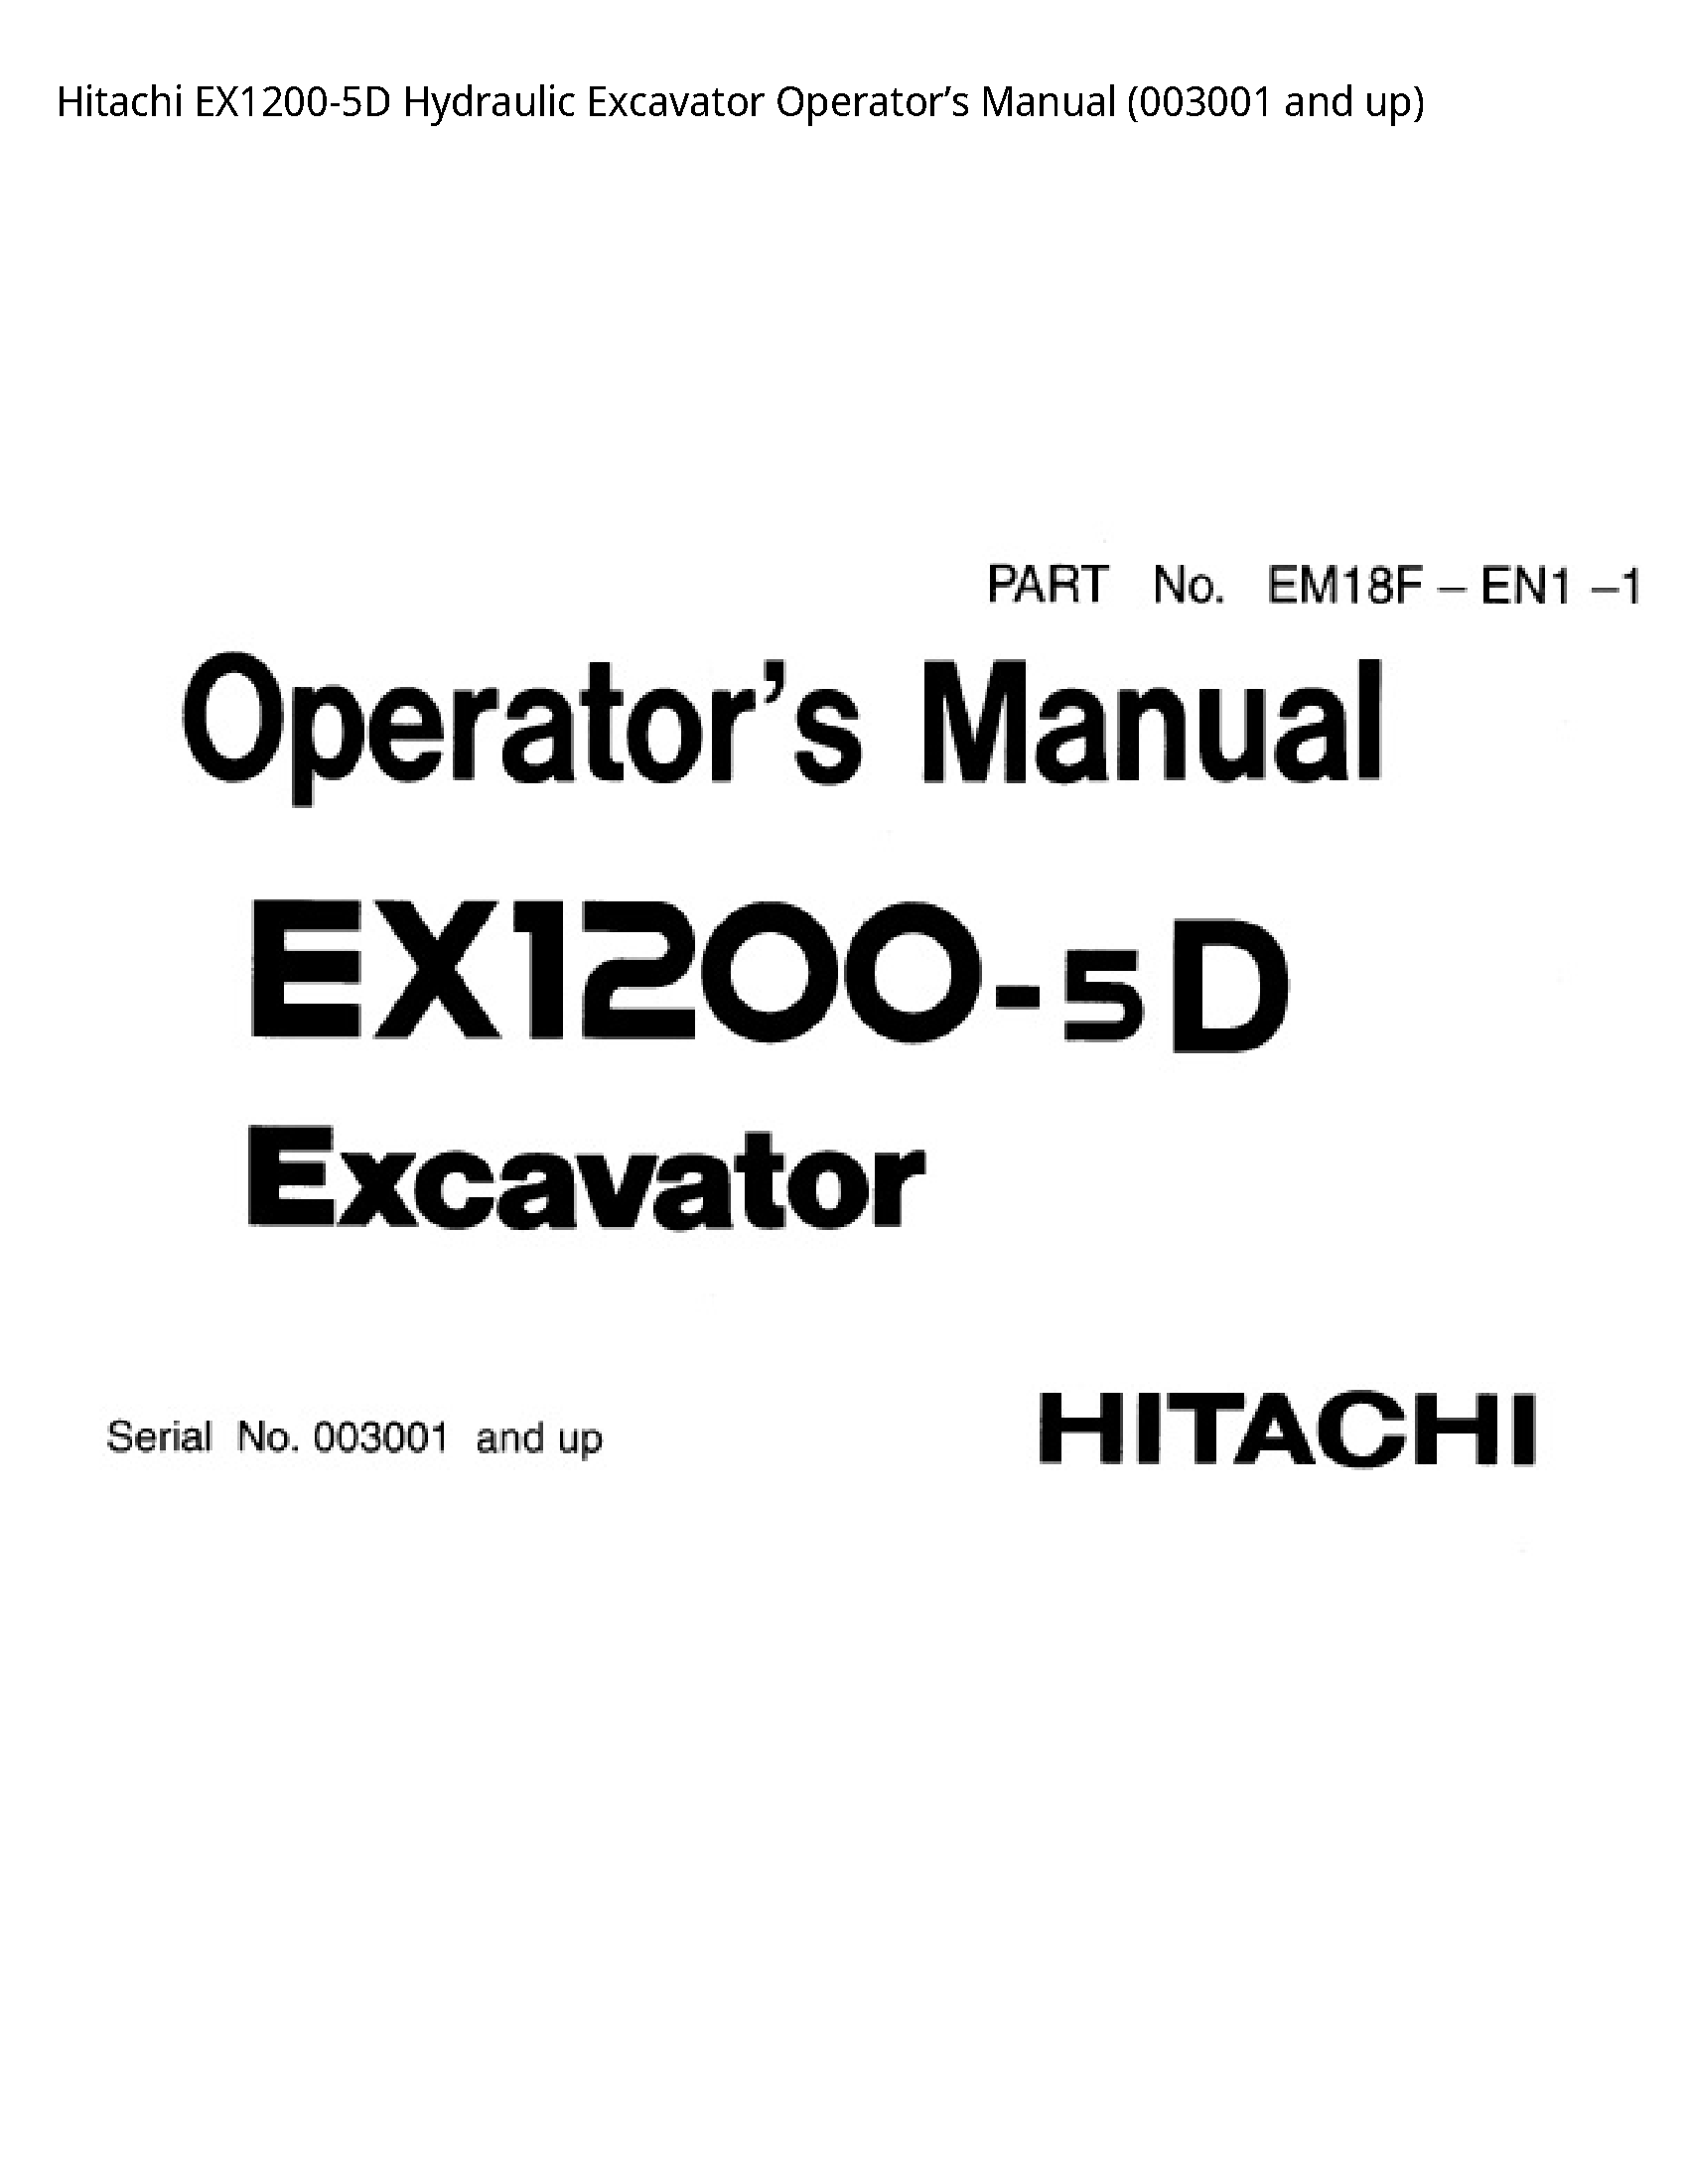 Hitachi EX1200-5D Hydraulic Excavator Operator’s manual